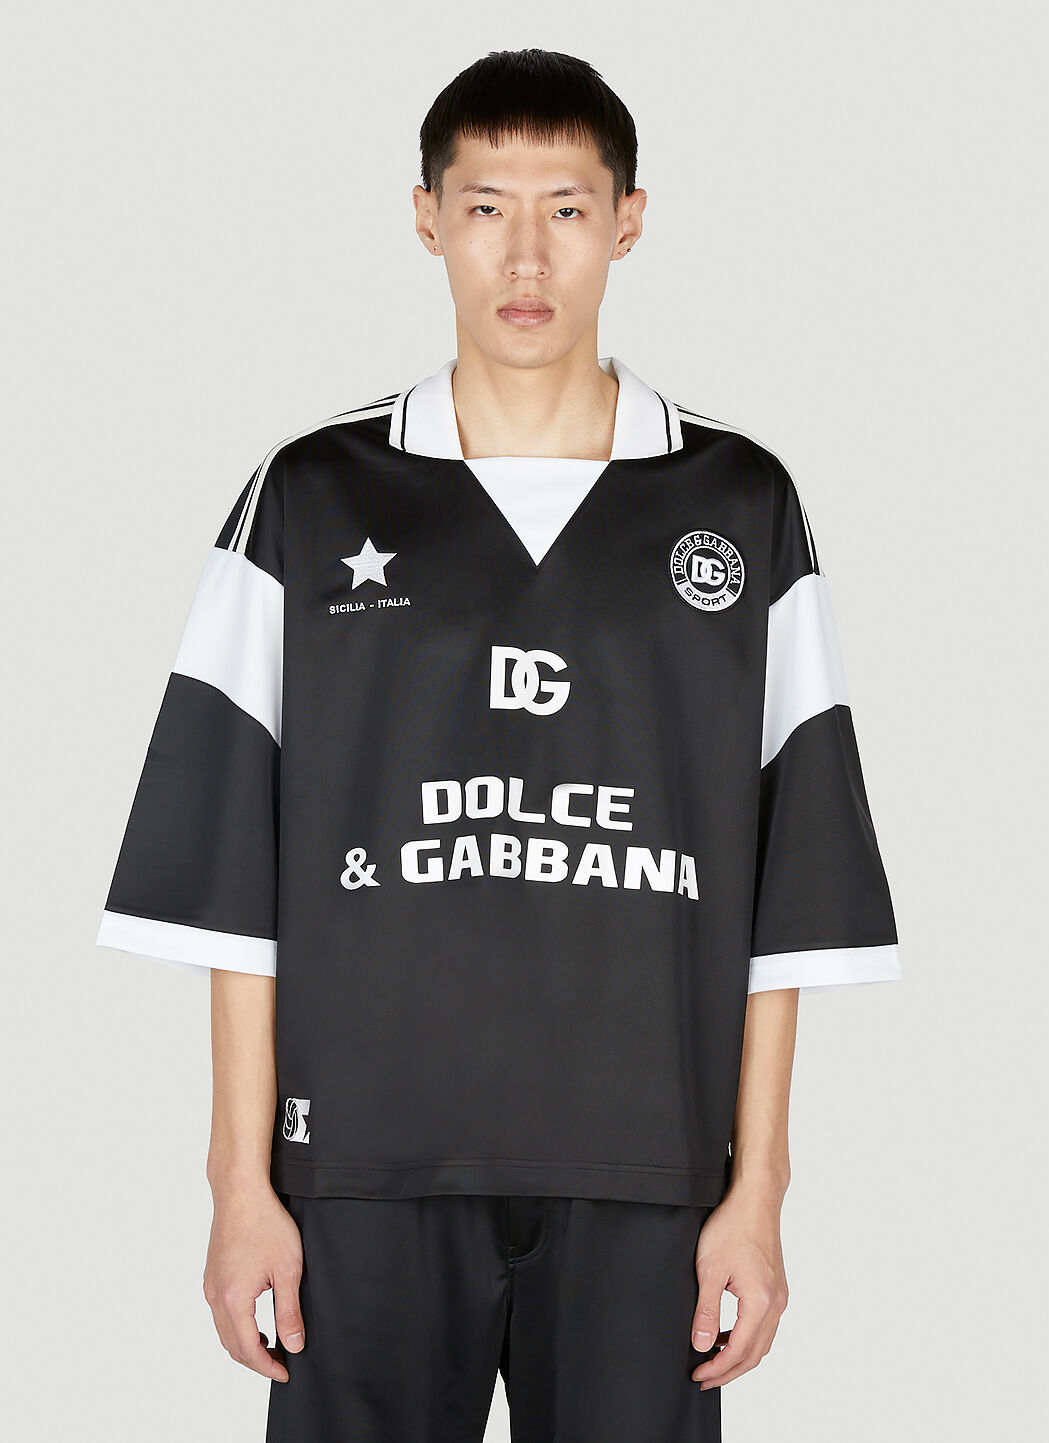 Dolce & Gabbana サッカー ロゴ ポロシャツ ブラック dol0154004